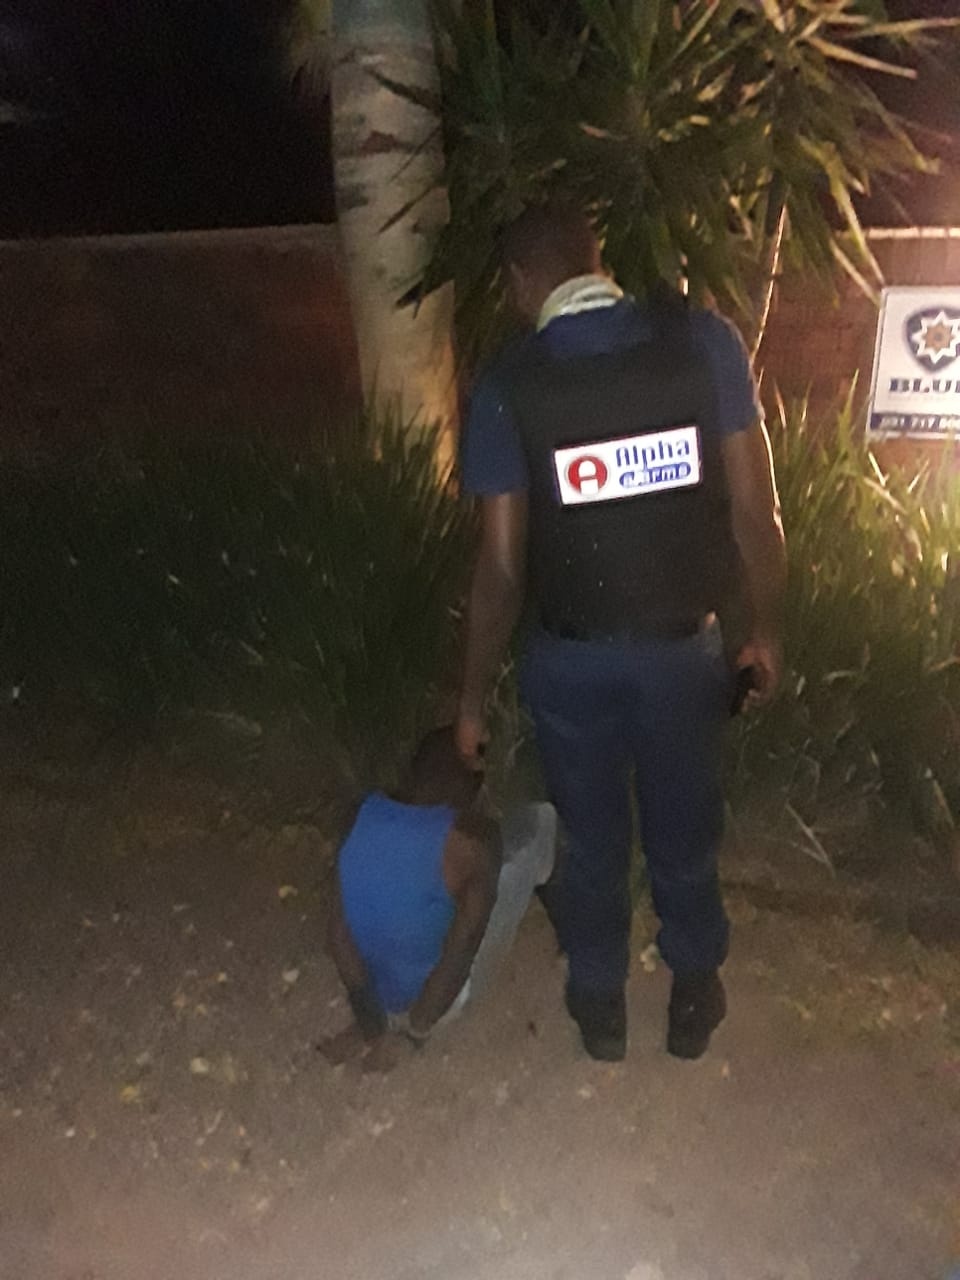 Housebreaking suspect arrested in Umhlanga